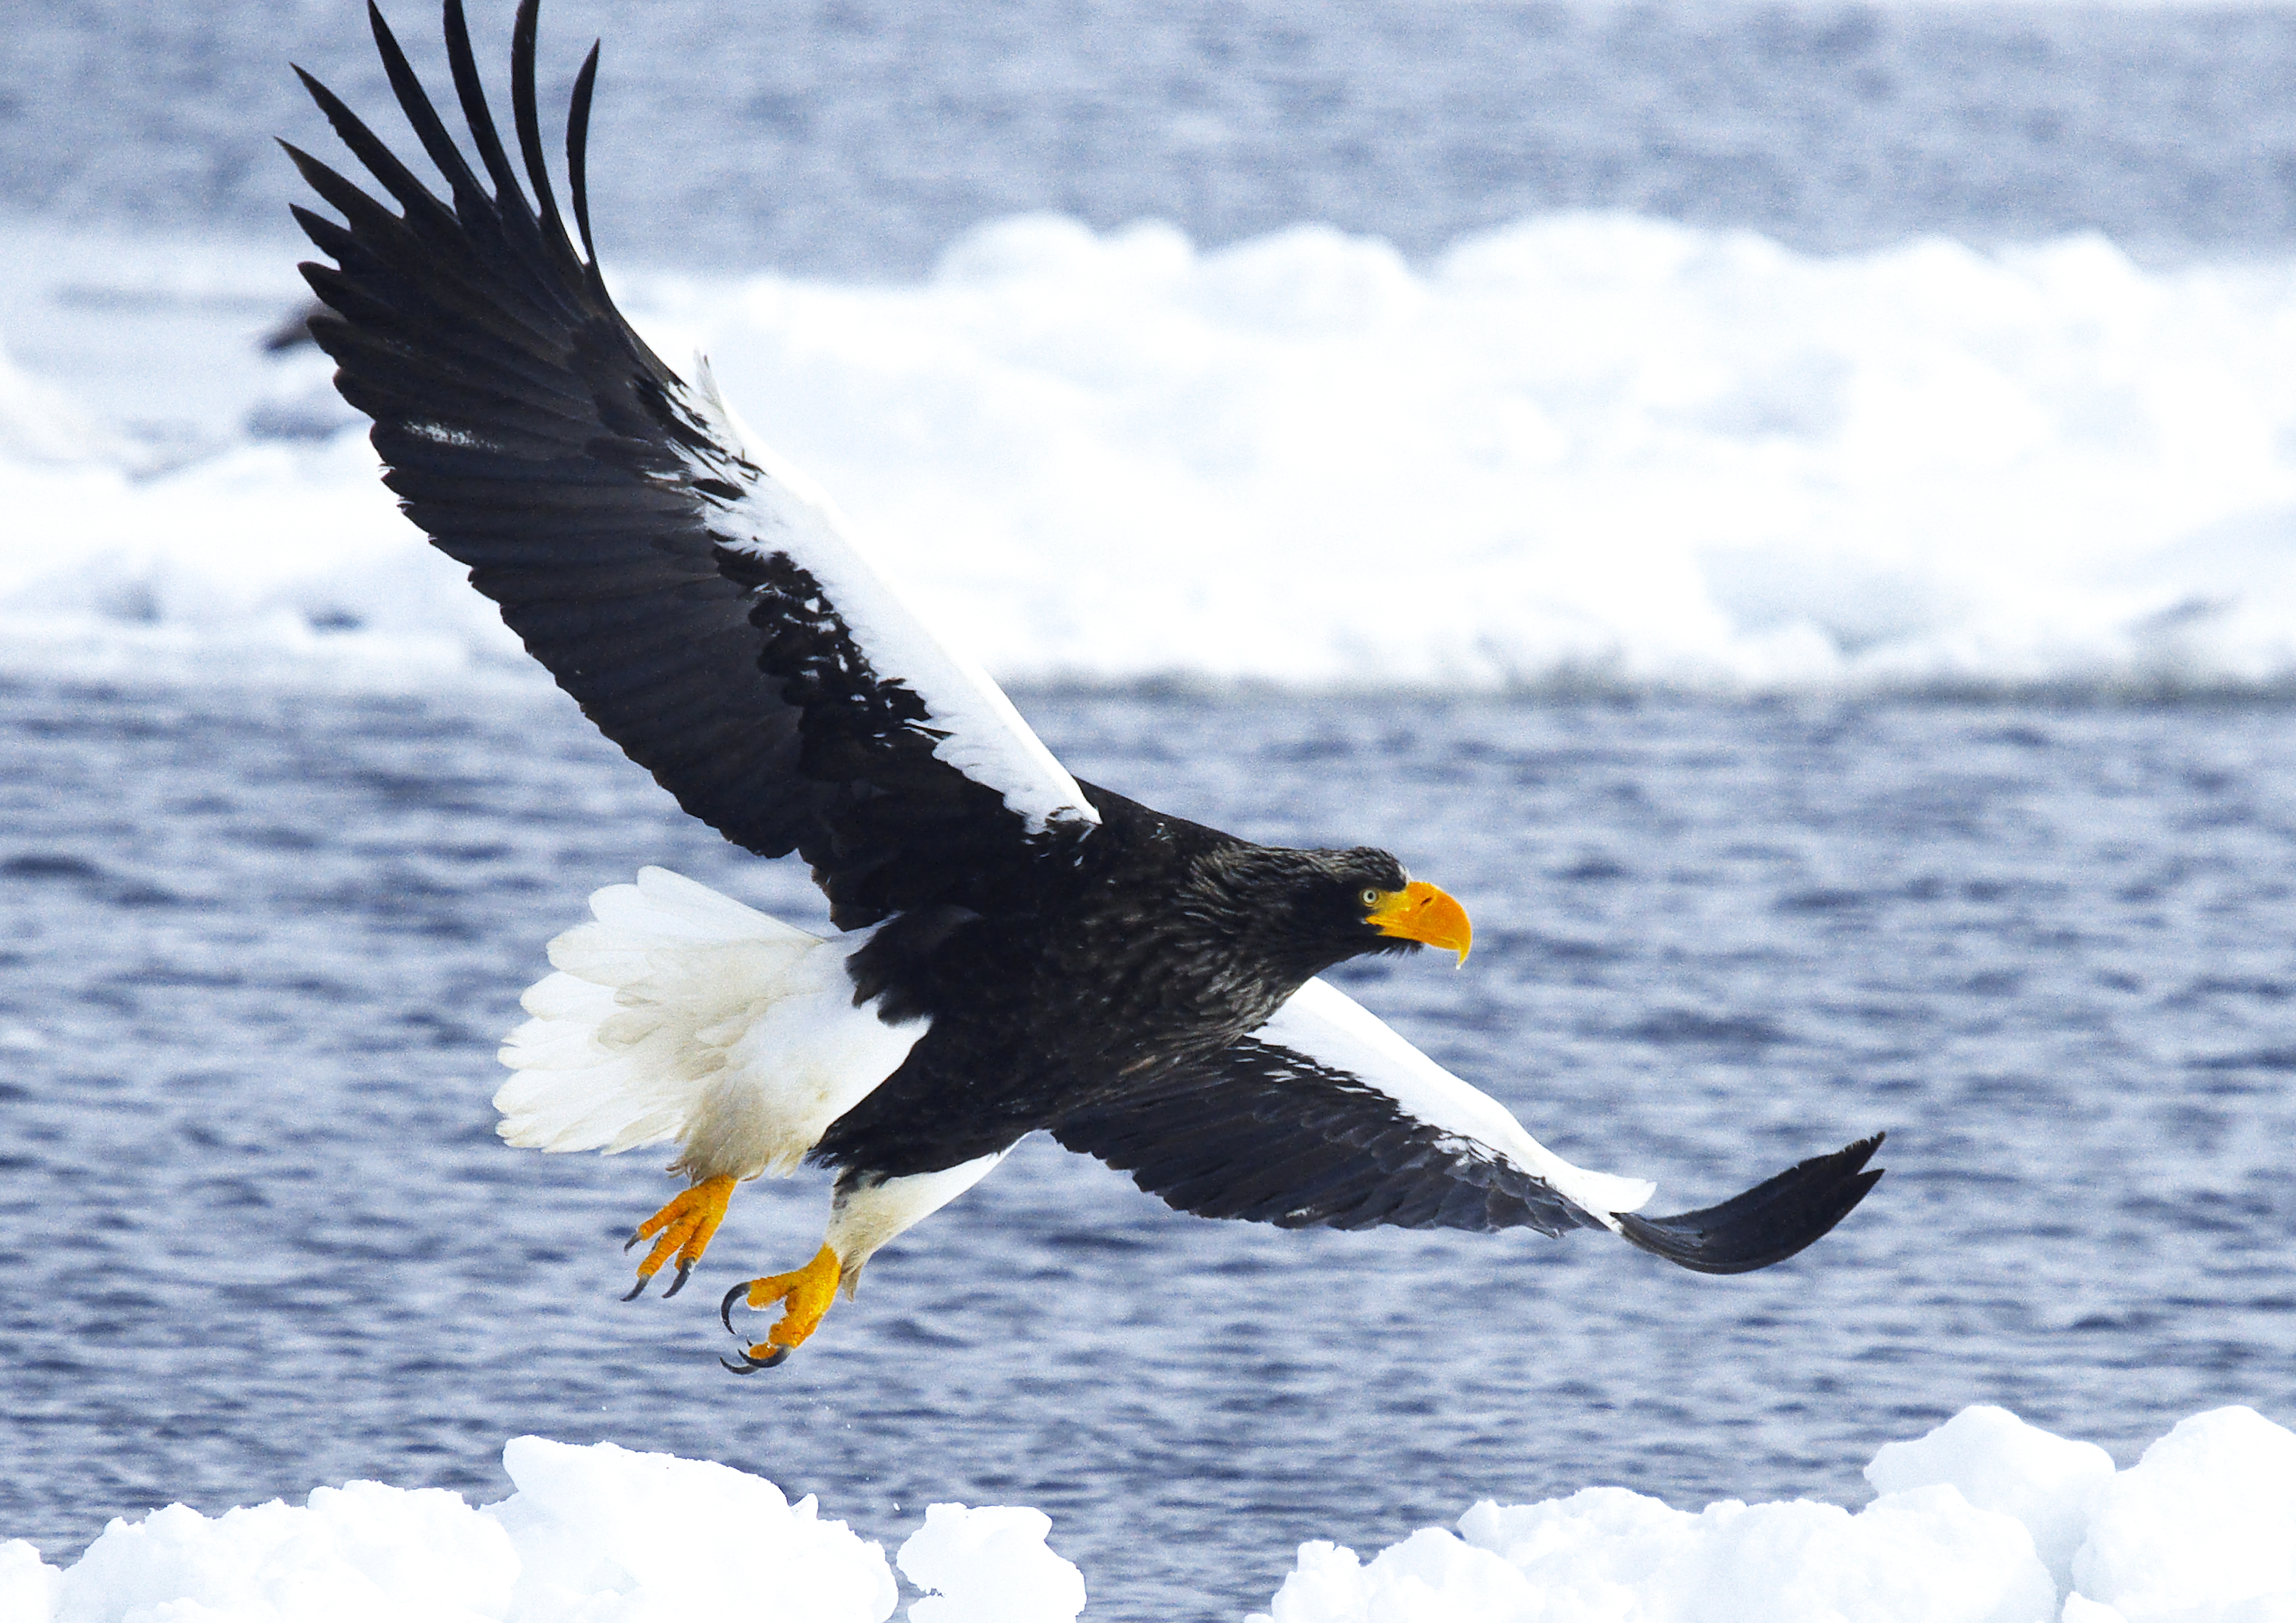 Steller's Sea Eagle flying